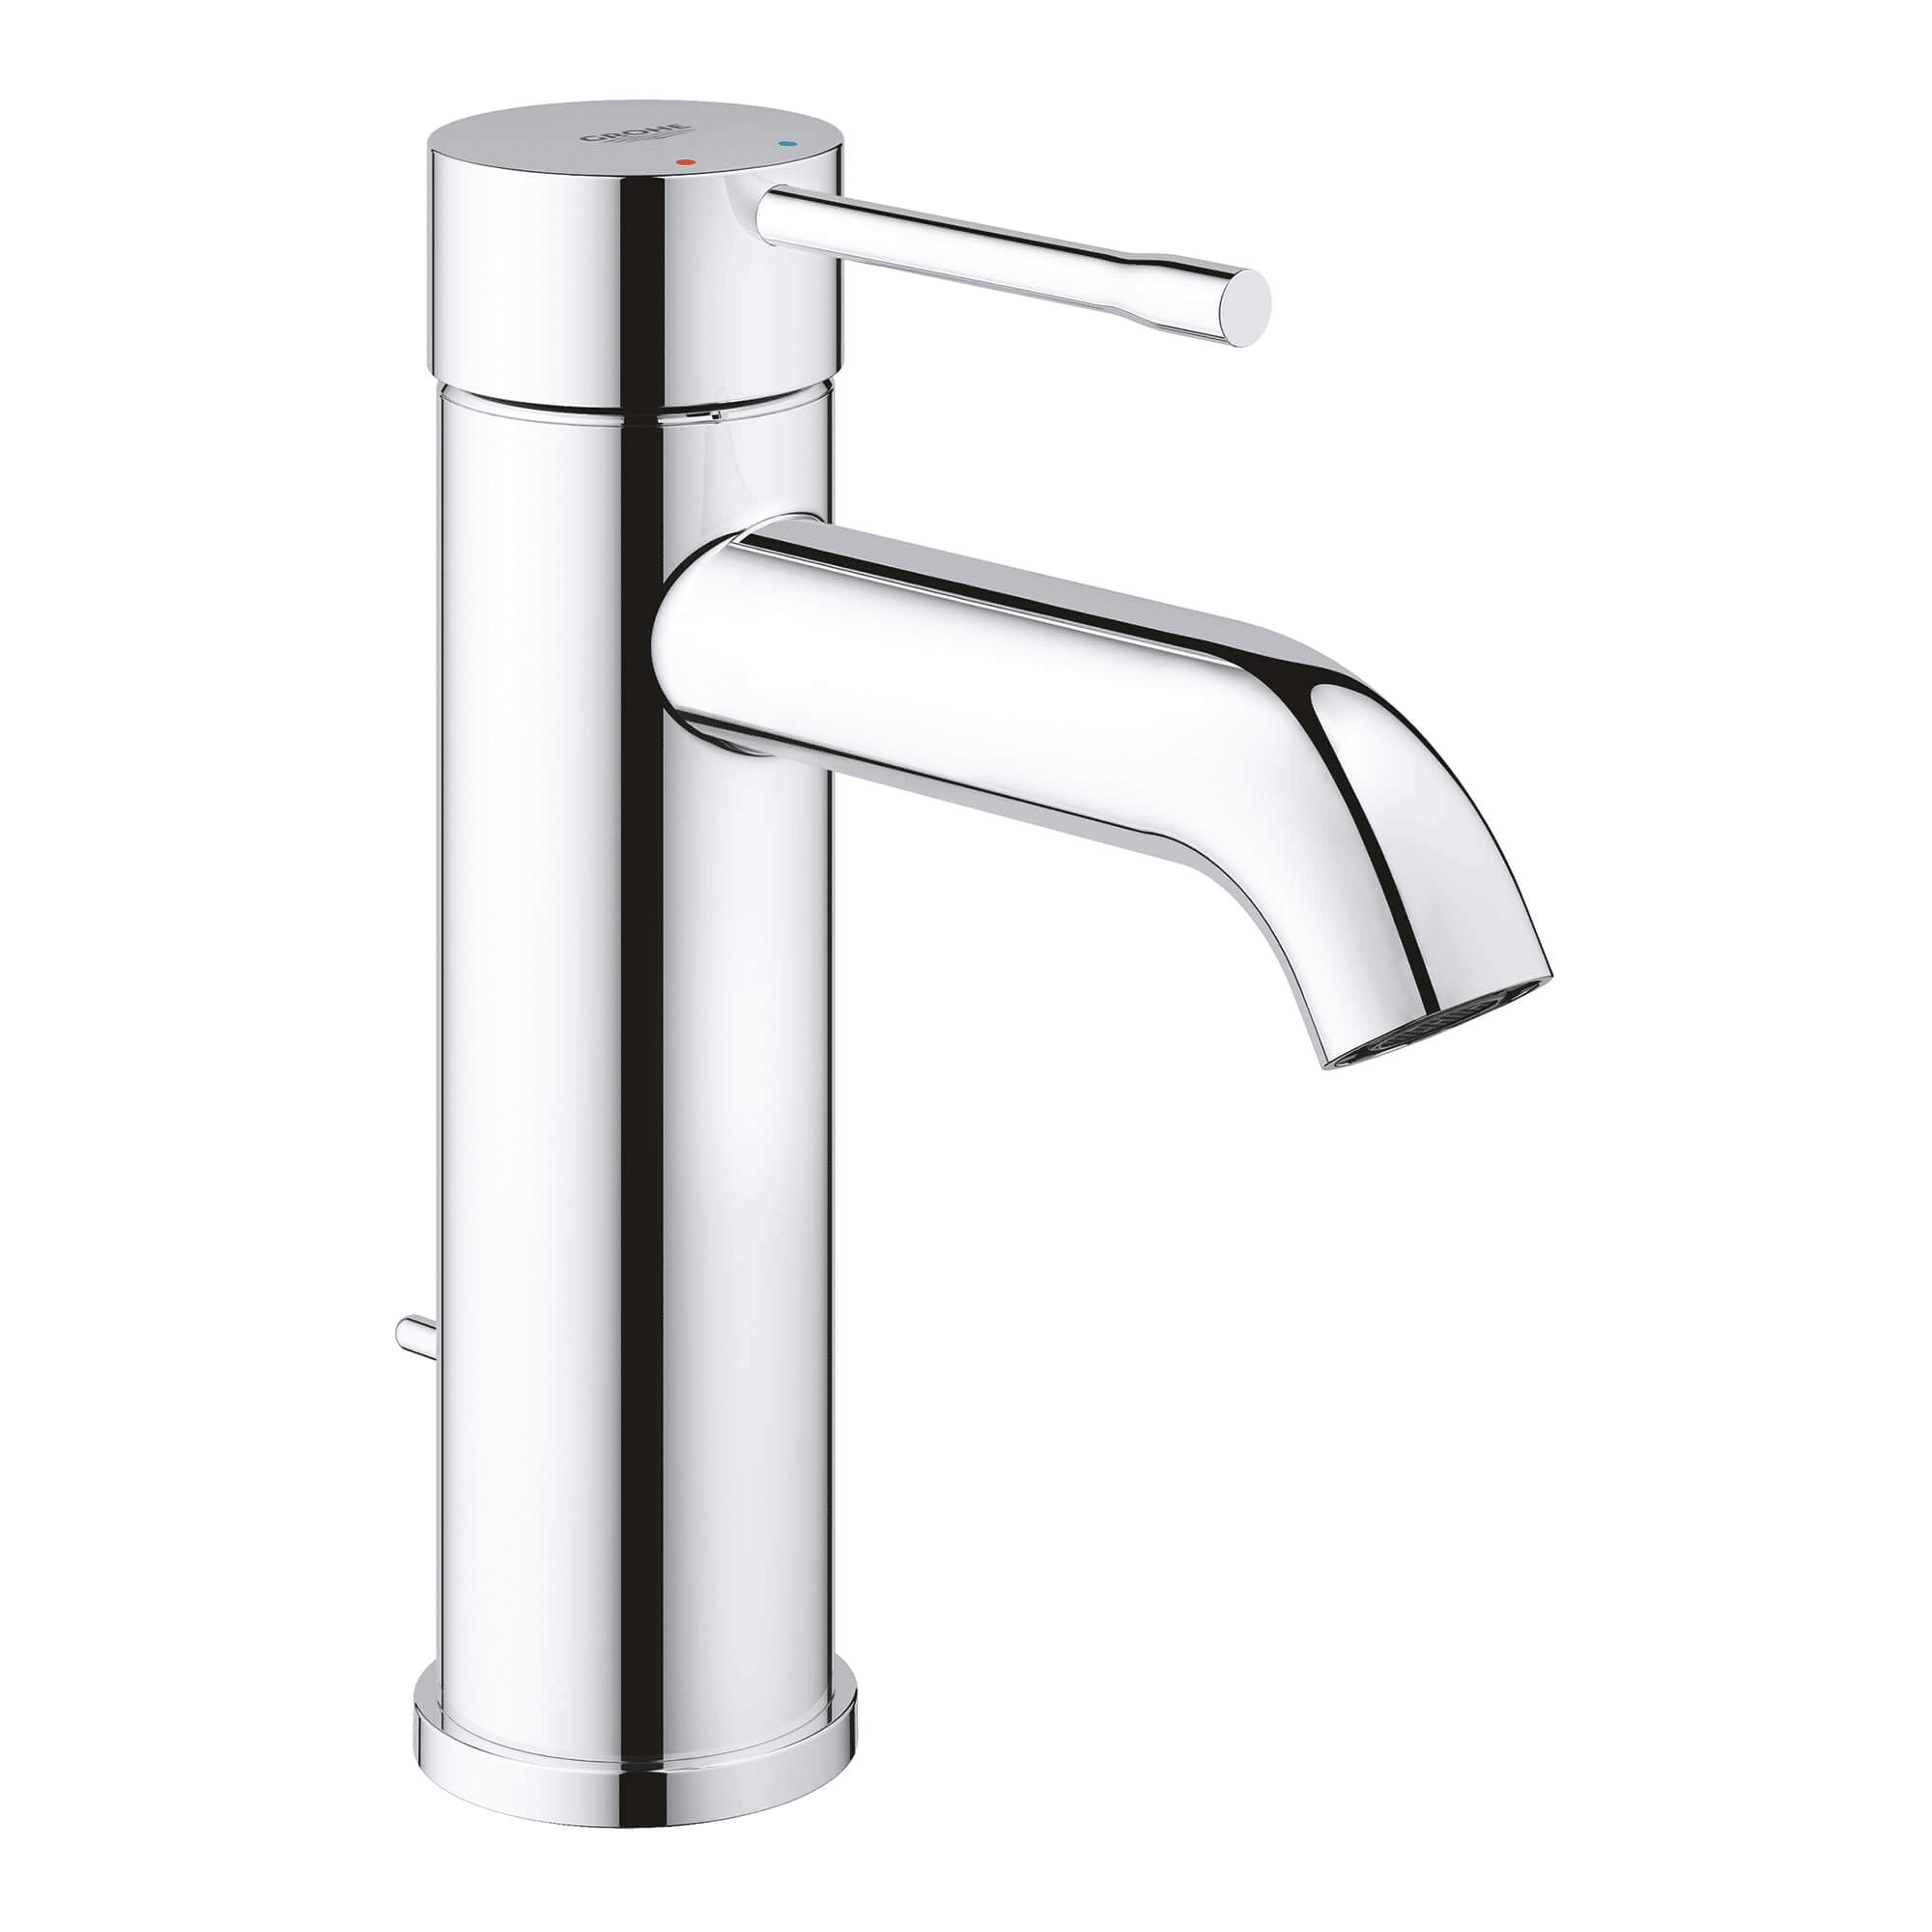 Single handle bathroom faucet